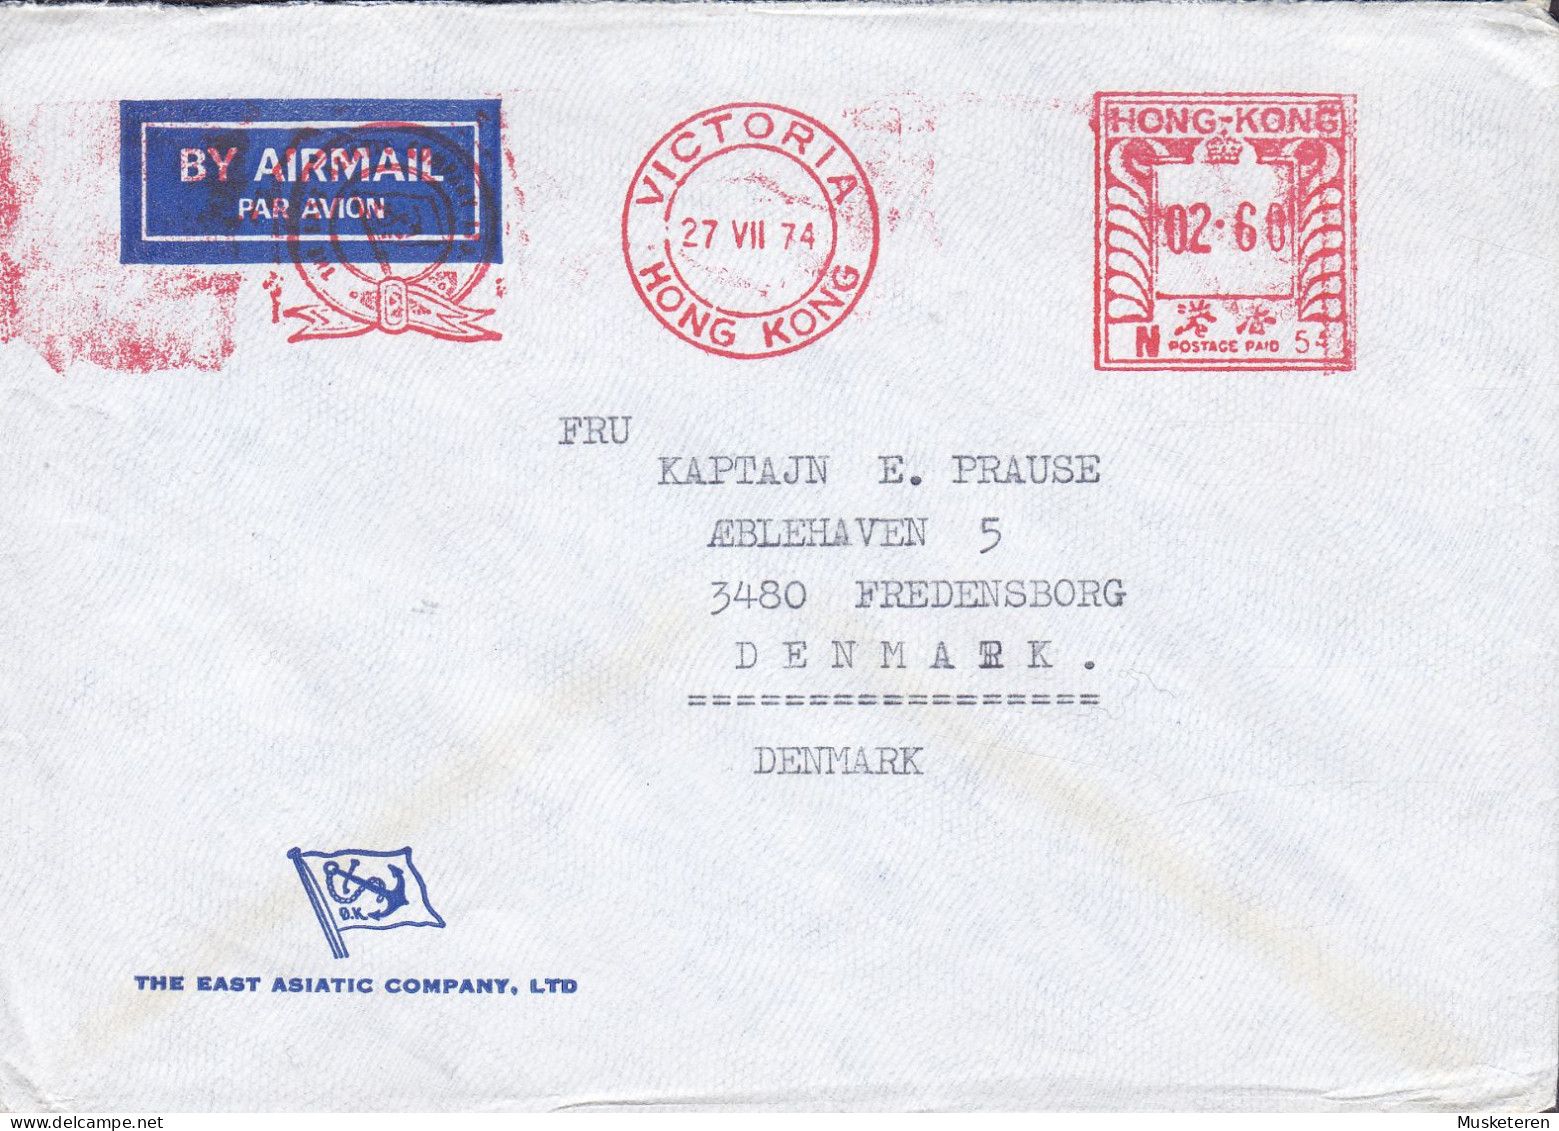 Hong Kong Captain M/S 'JUTLANDIA' THE EAST ASIATIC COMPANY, VICTORIA 1974 Meter Ships Mail Cover FREDENSBORG Denmark - Briefe U. Dokumente